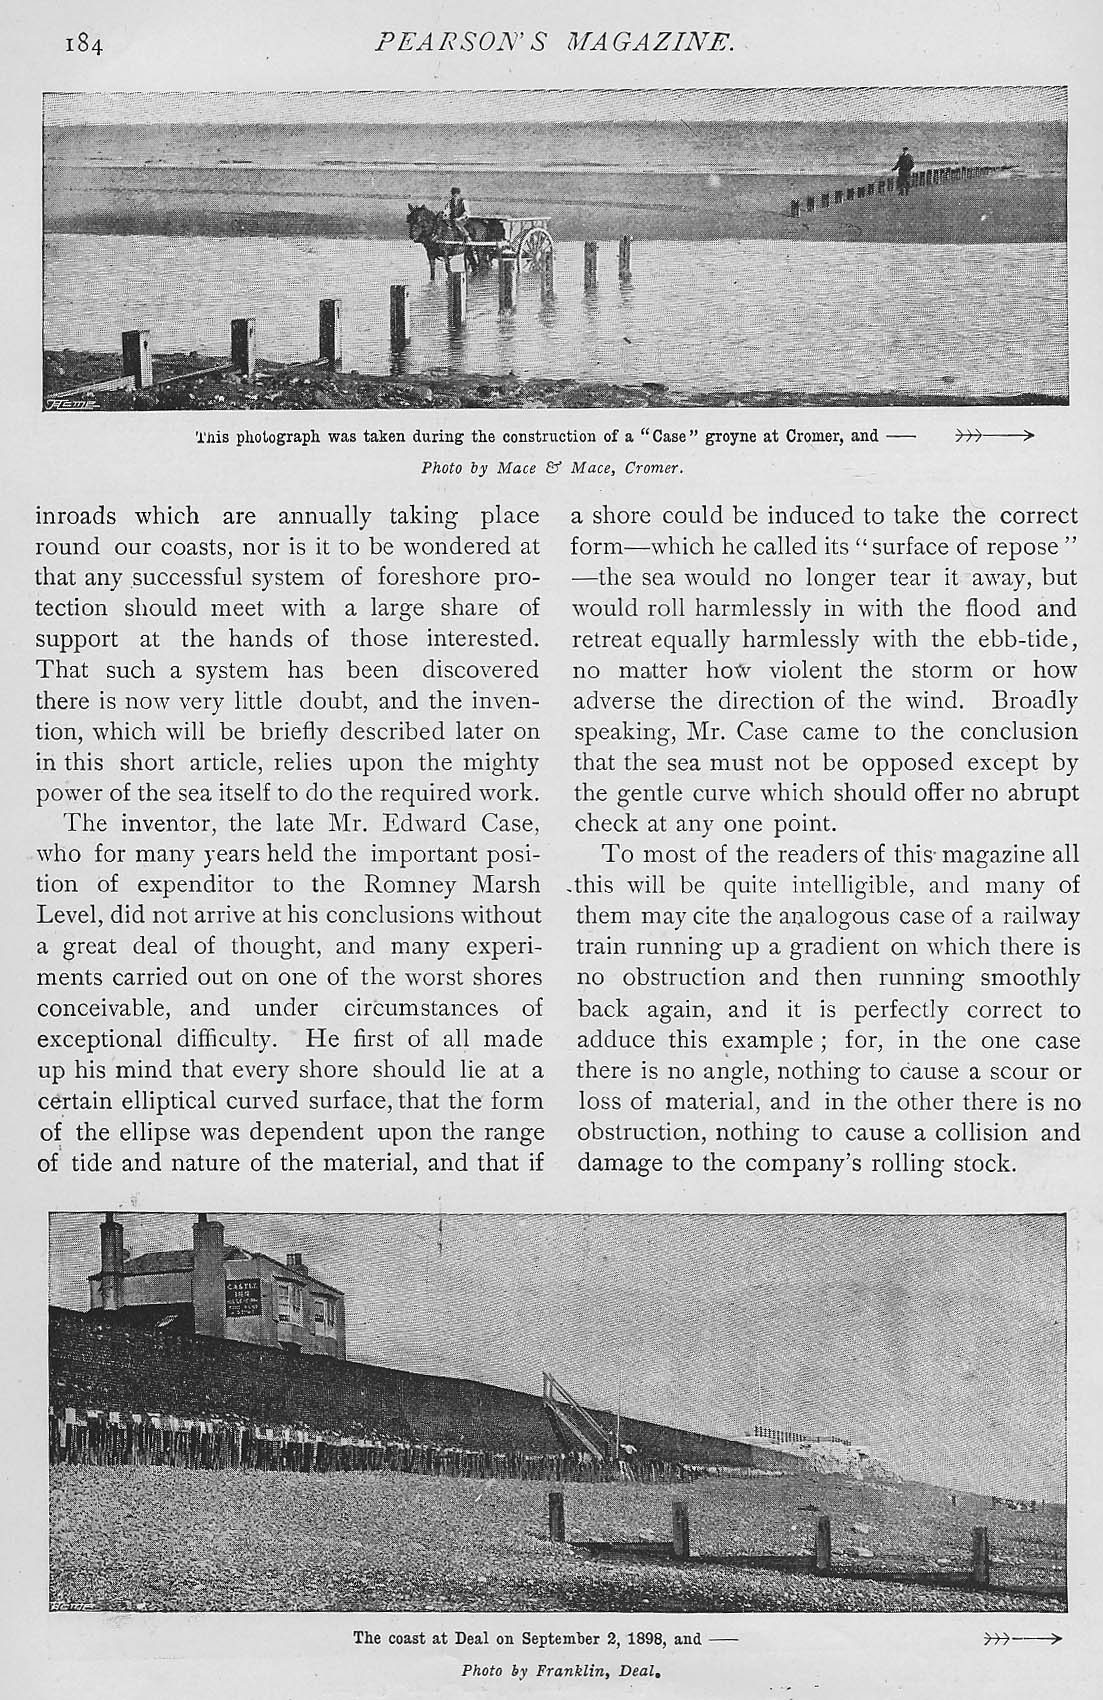 Pearson's Magazine February 1900